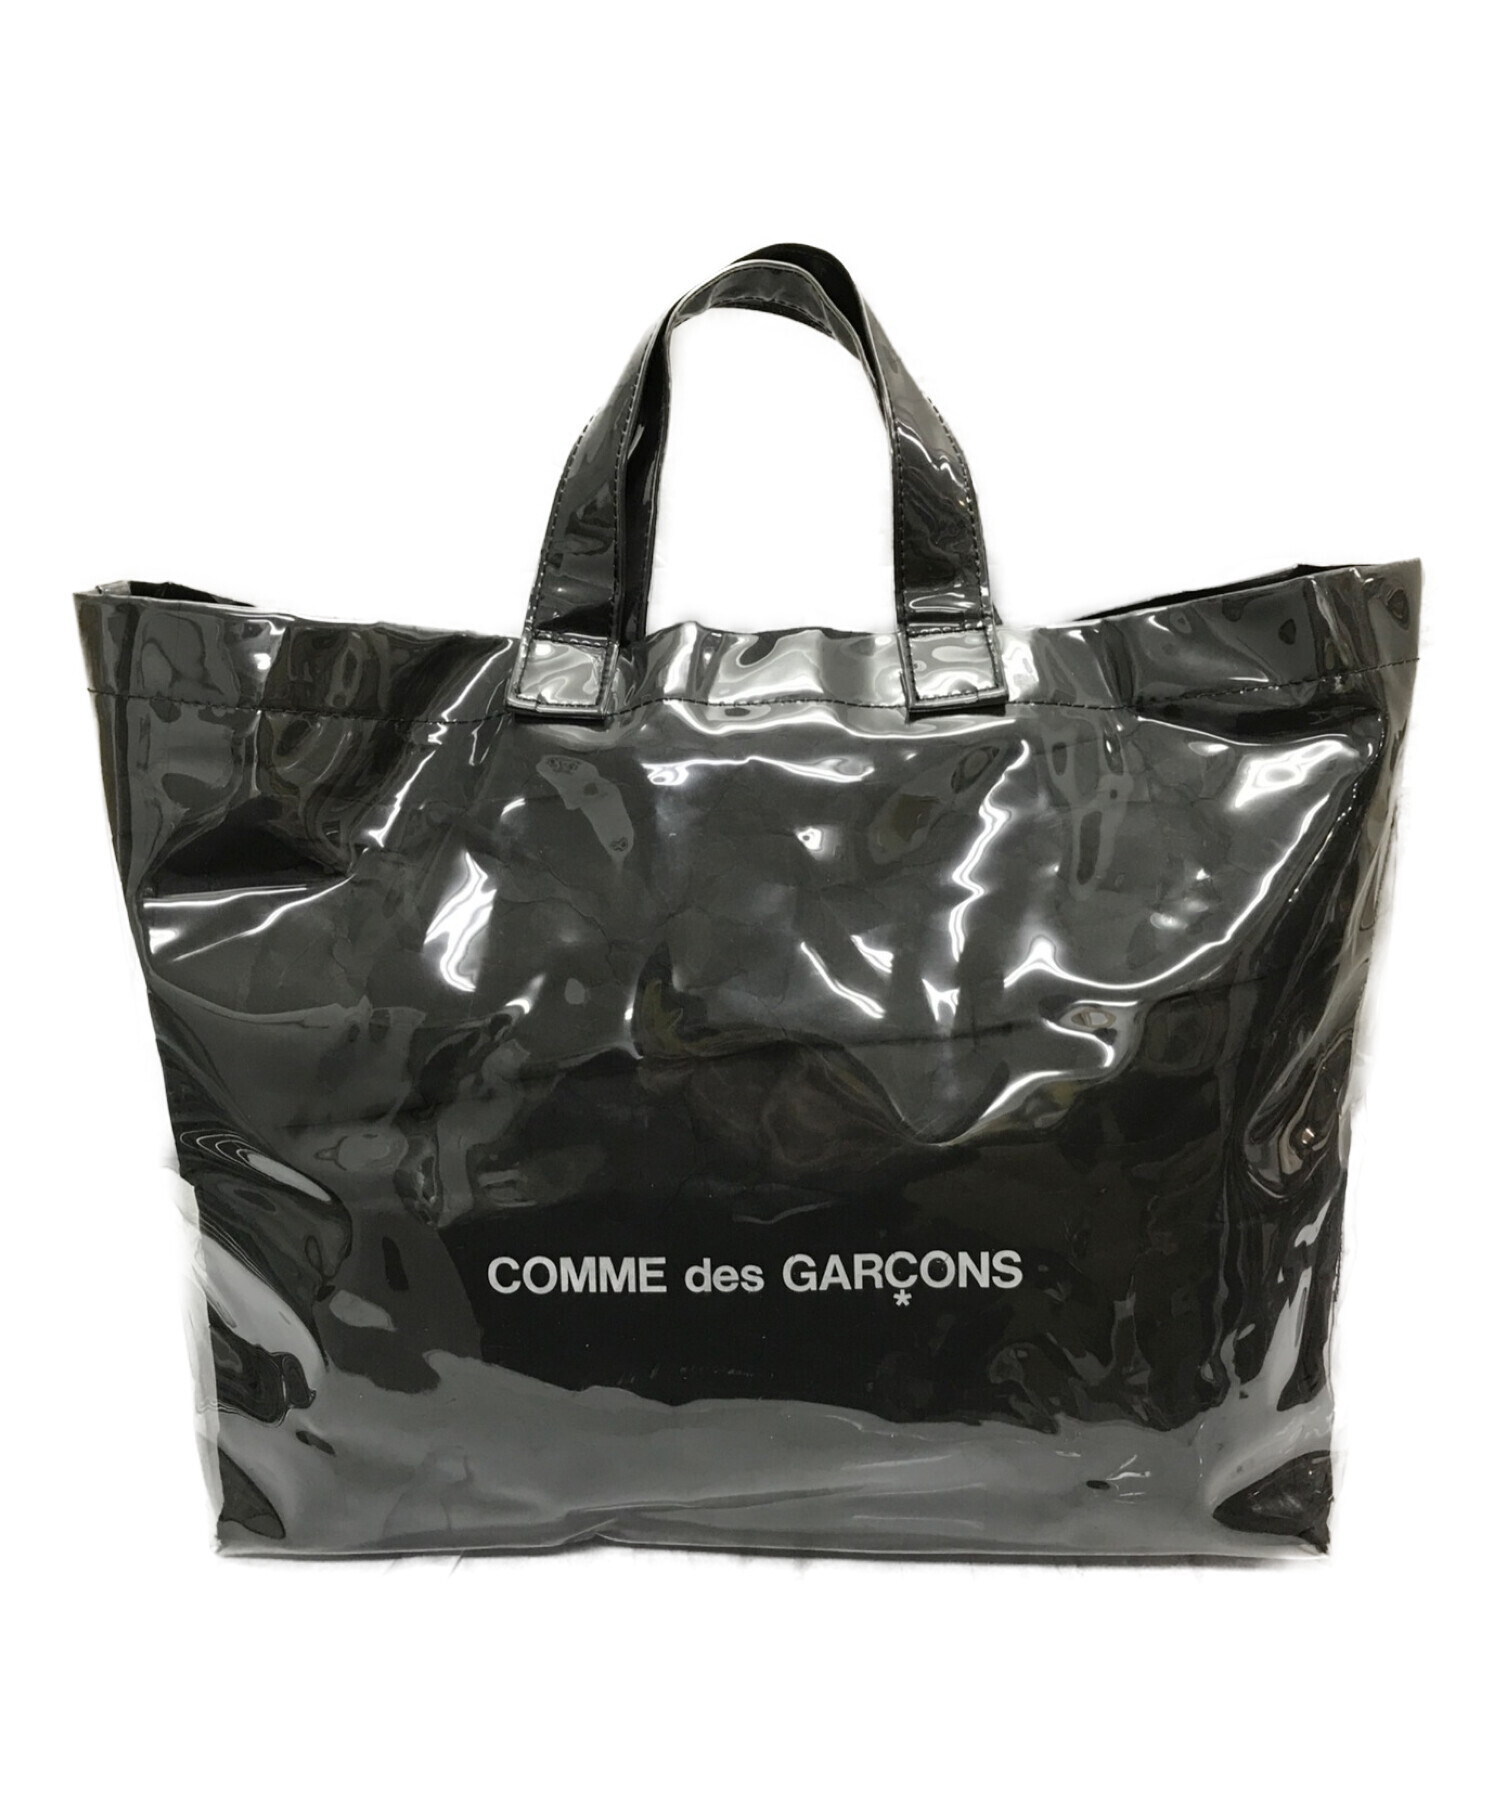 COMME des GARCONS (コムデギャルソン) ビニールトートバッグ ブラック サイズ:下記参照